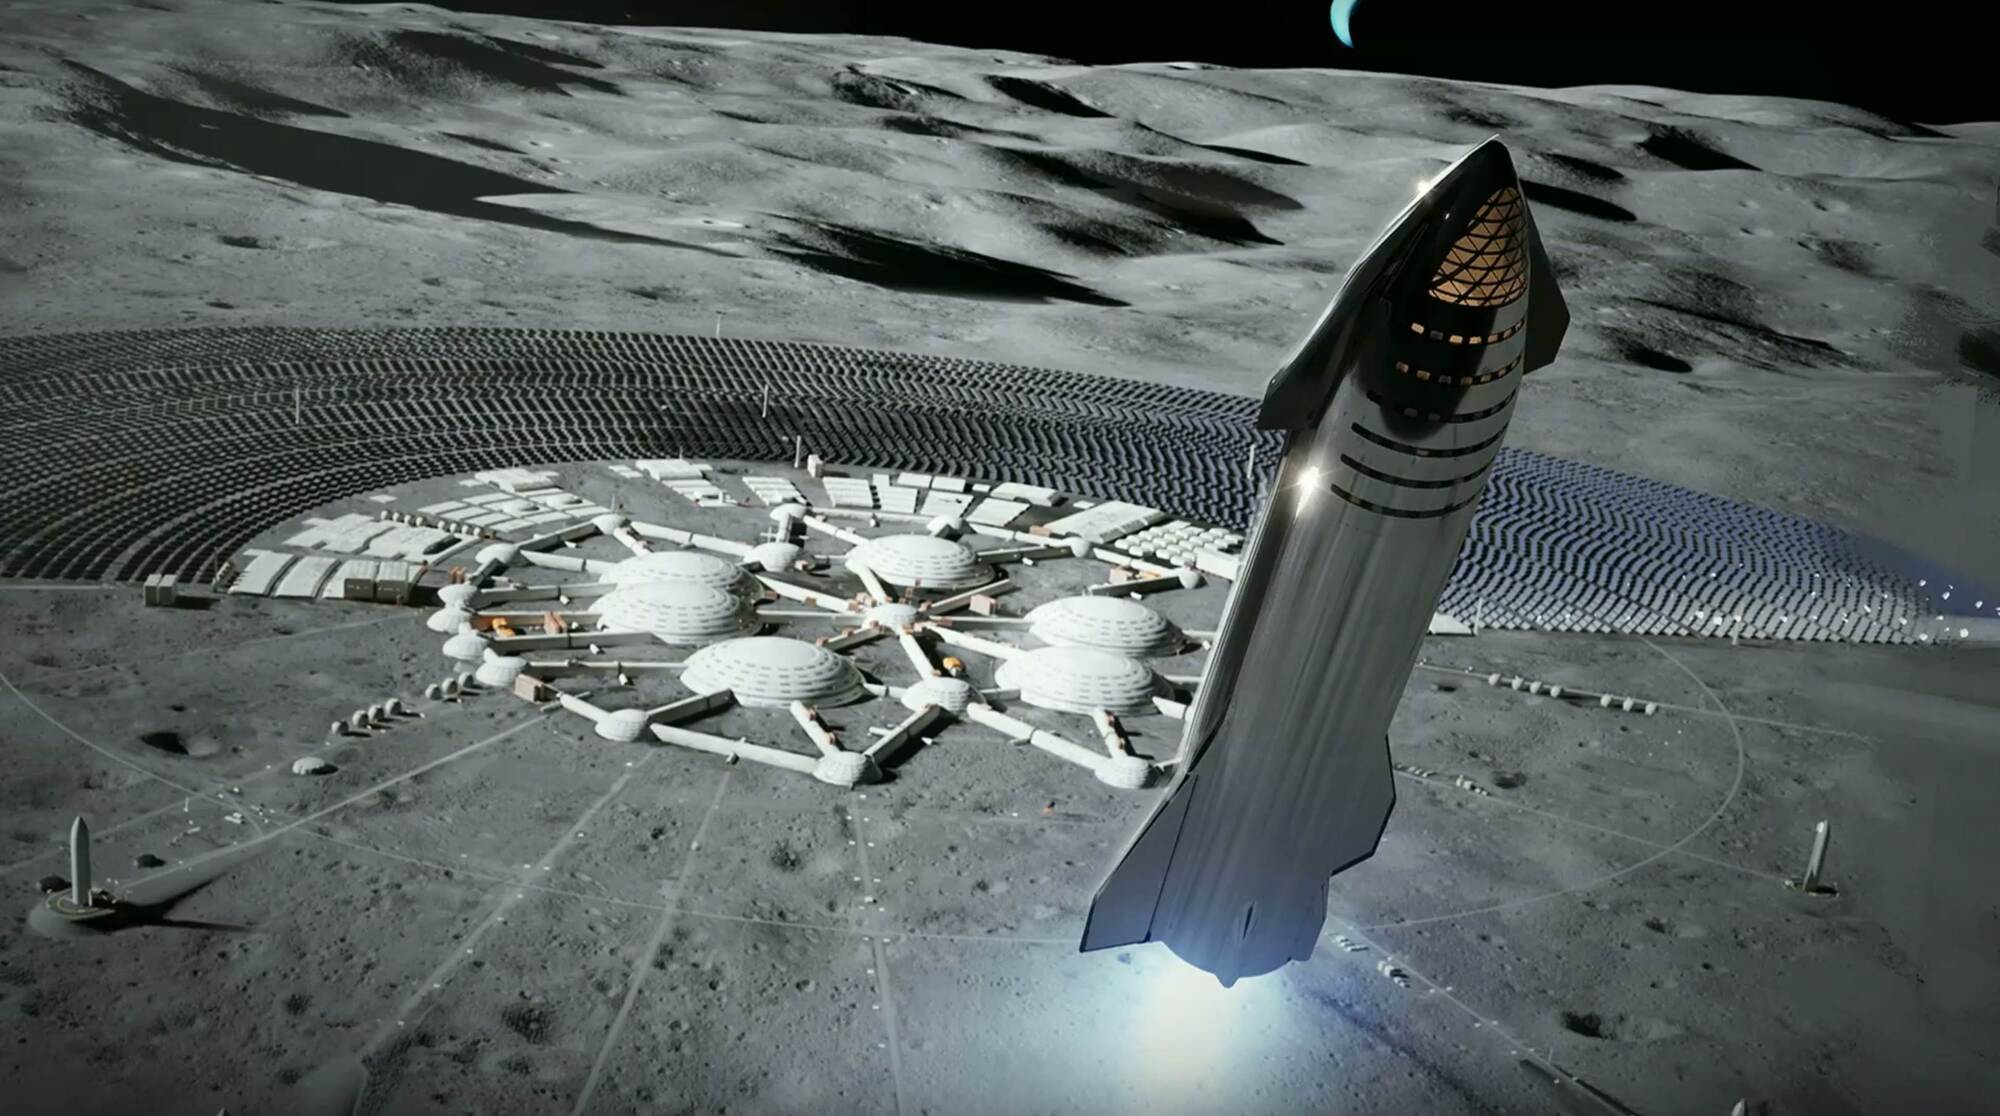 Starship 2019 Moon base render SpaceX 1